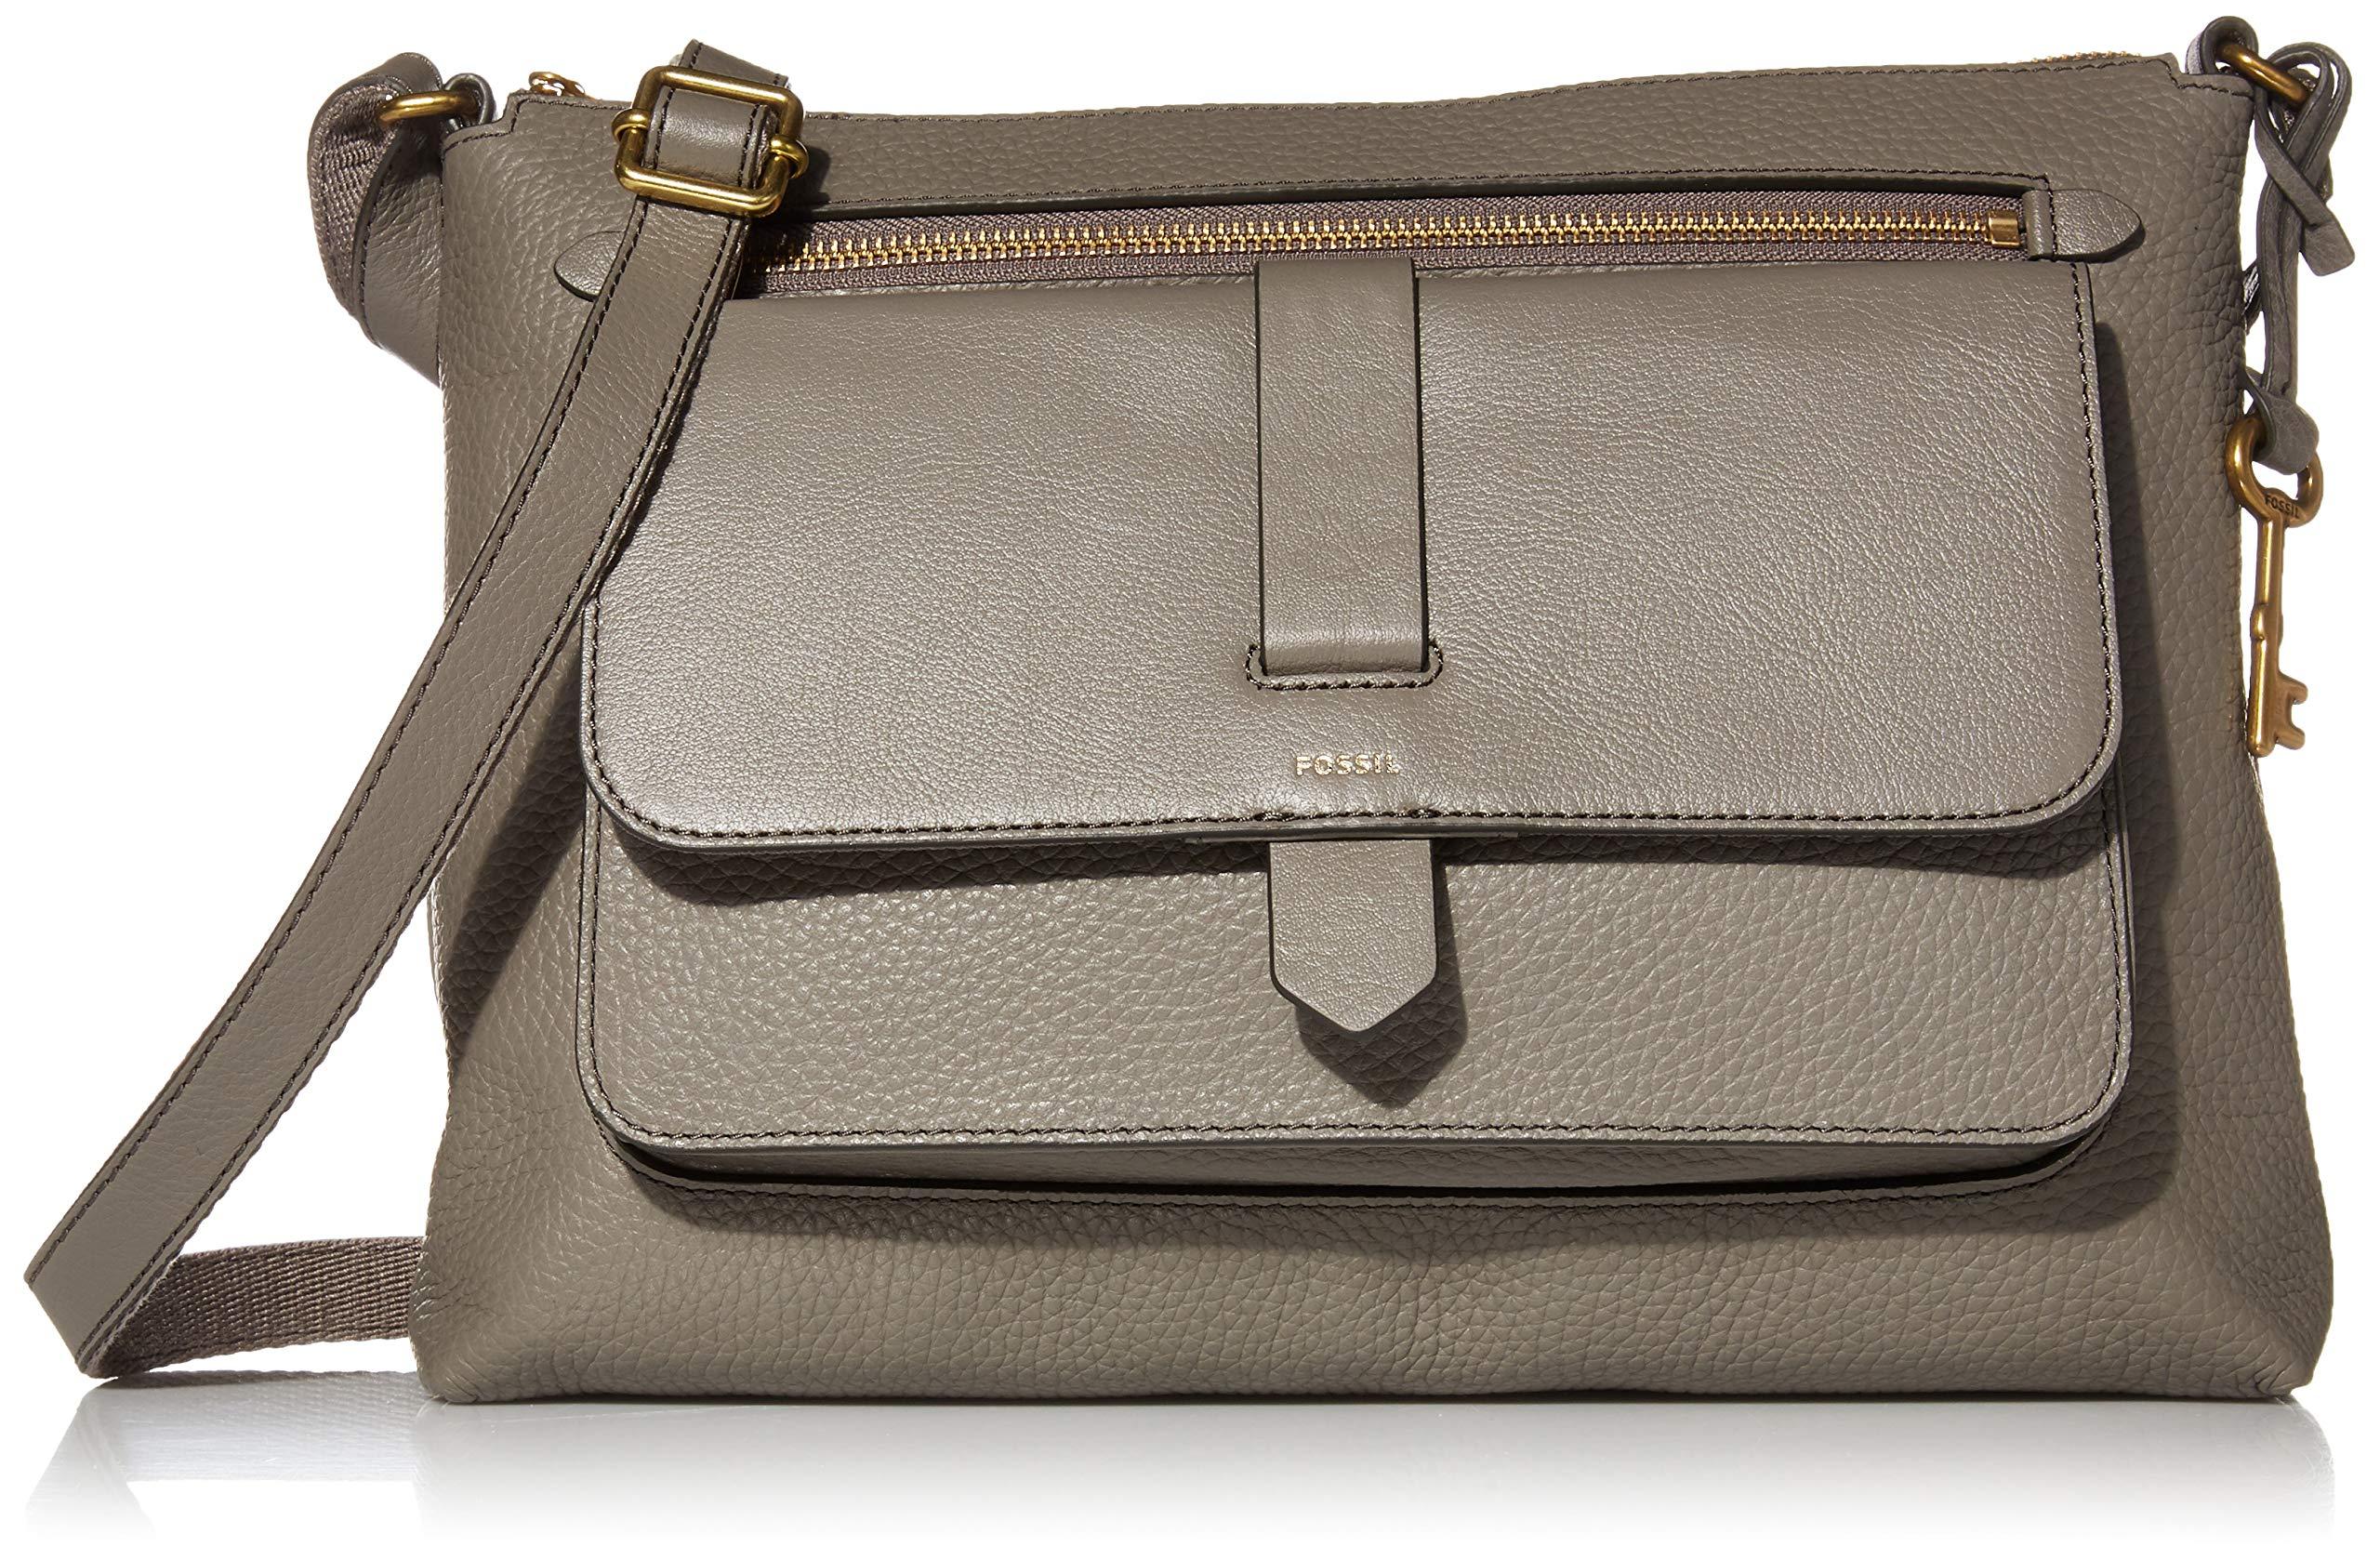 Fossil Kinley Leather Crossbody Handbag in Grey (Gray) - Save 60% - Lyst